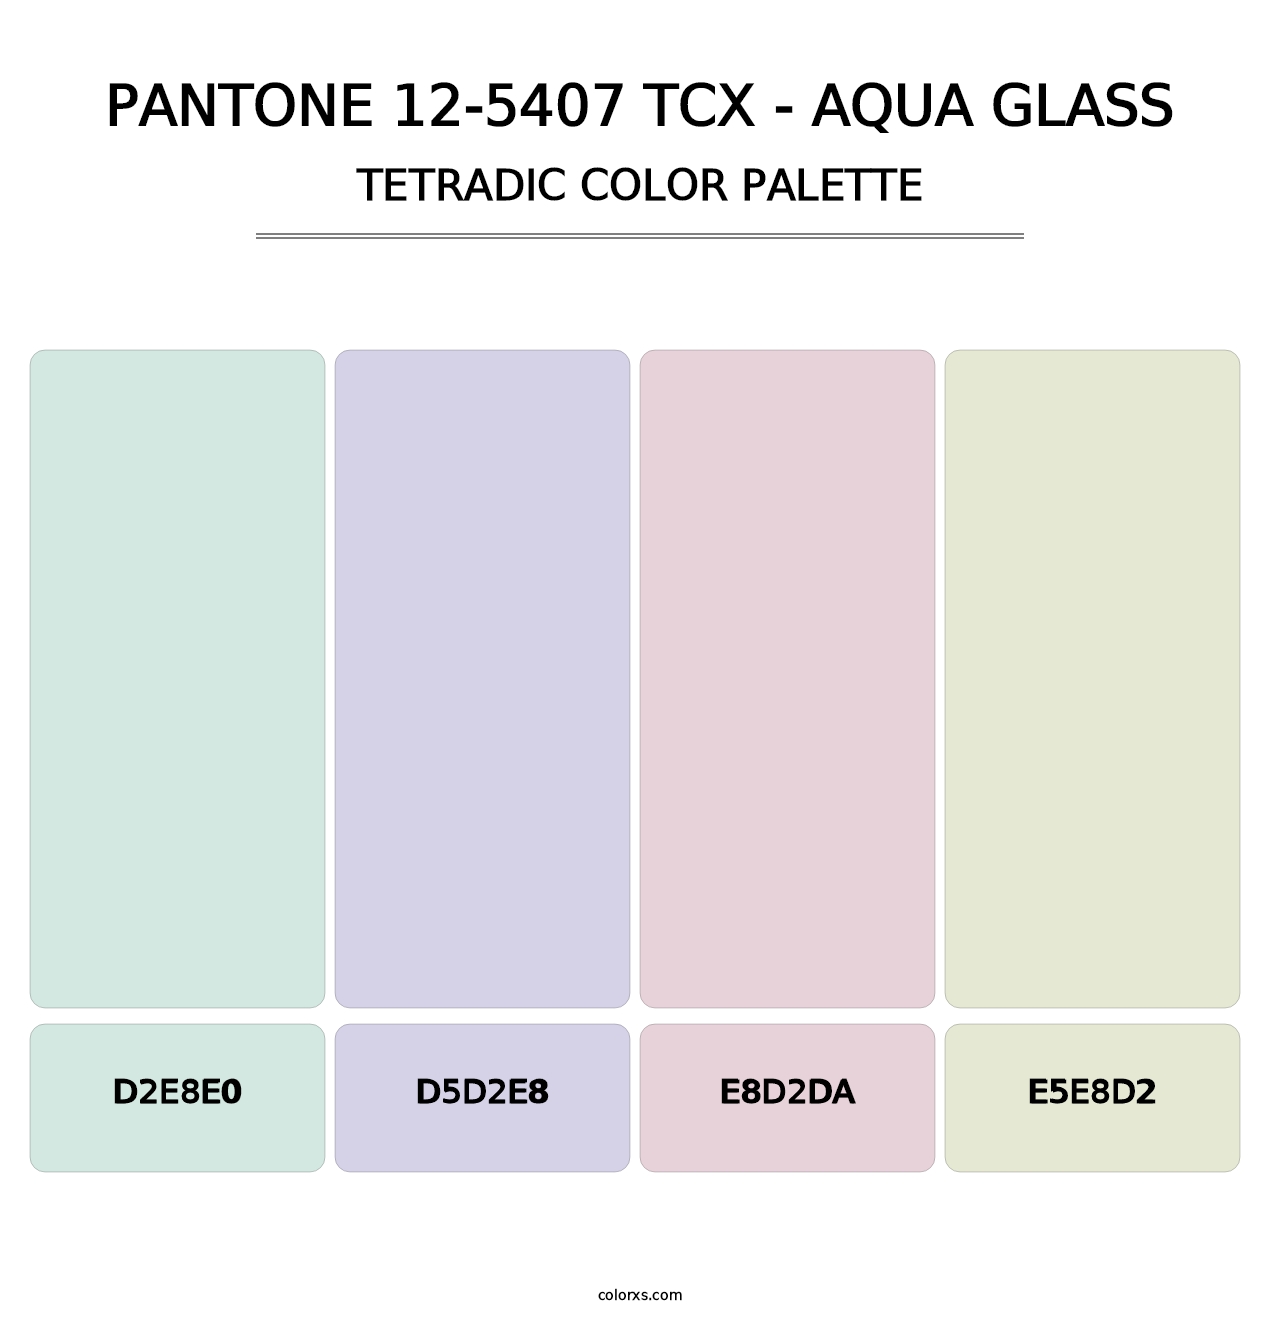 PANTONE 12-5407 TCX - Aqua Glass - Tetradic Color Palette